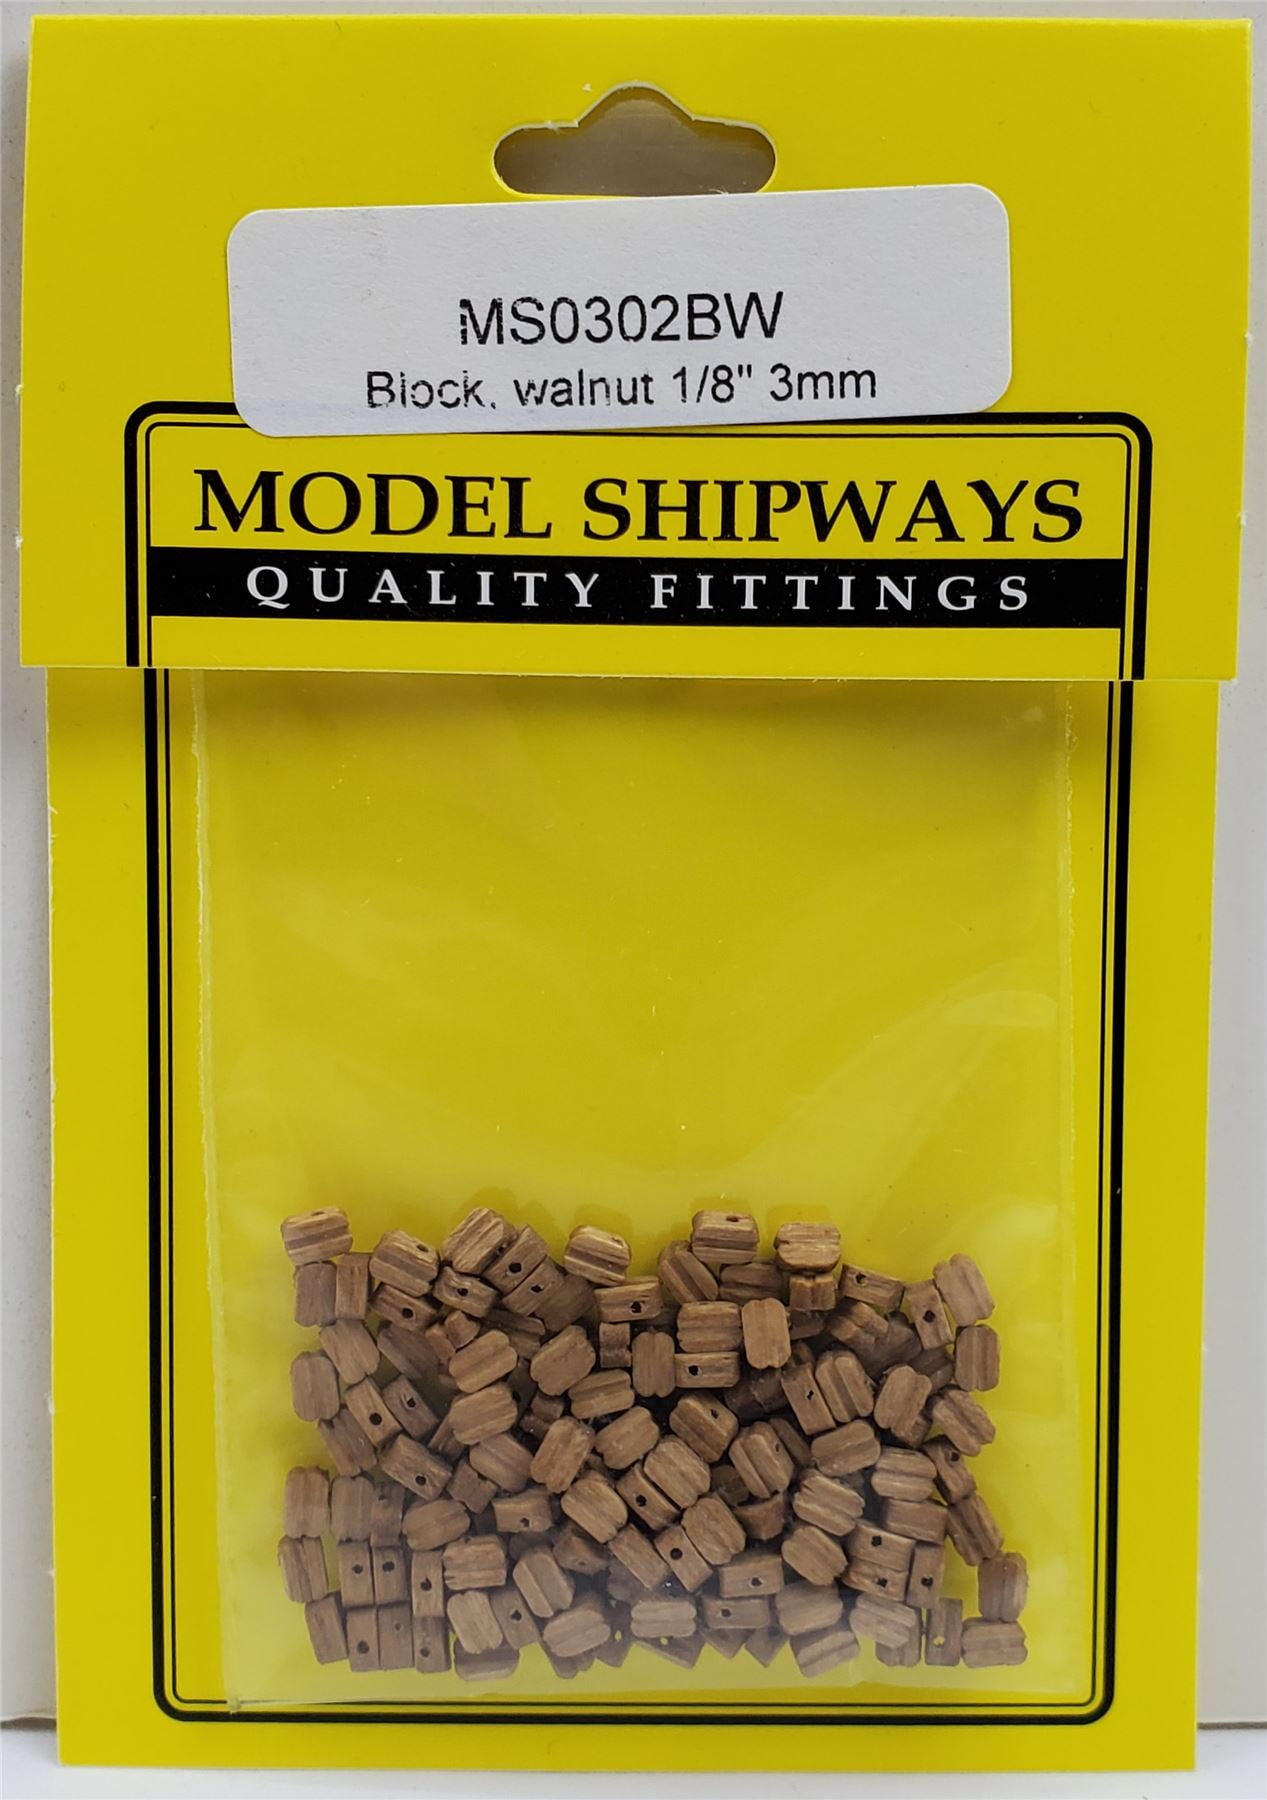 3mm Model Shipways Double Sheave Block Walnut 1/8" - 150 pack 